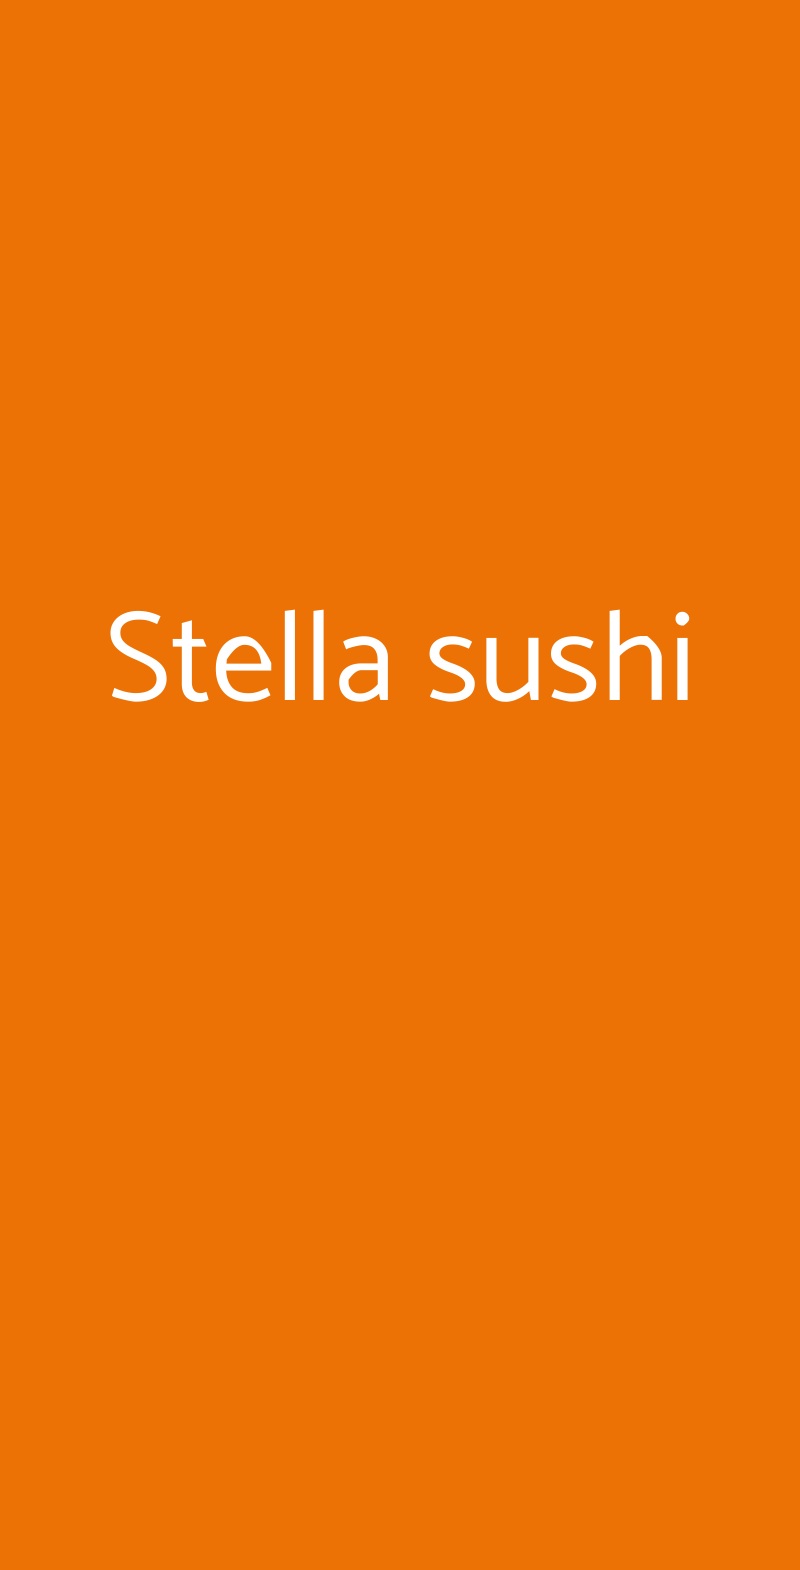 Stella sushi Milano menù 1 pagina